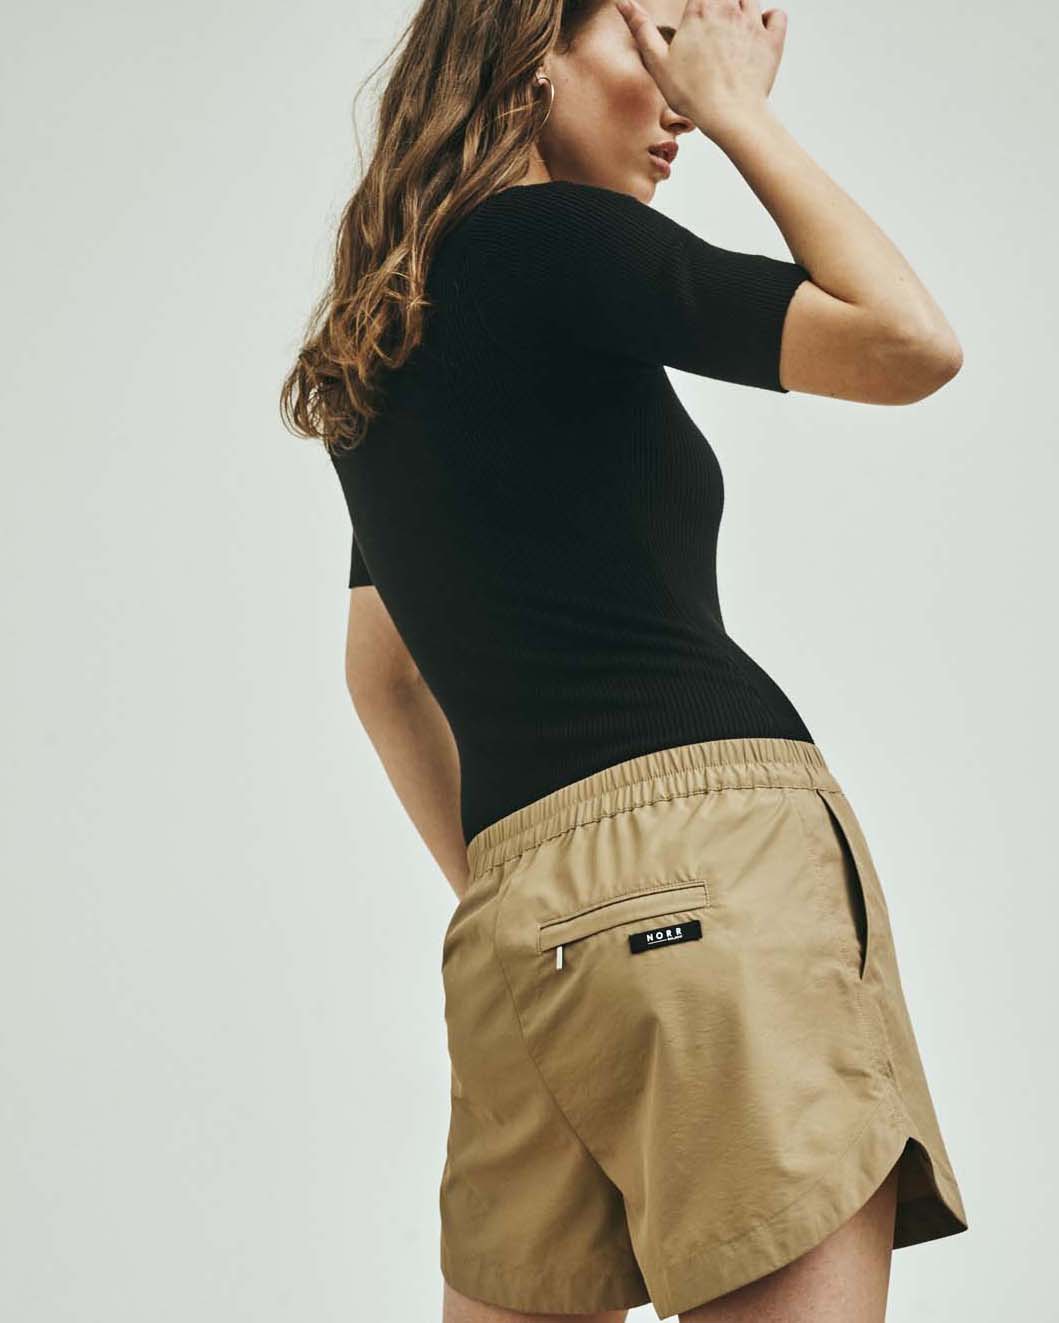 Coras shorts - Light brown - L